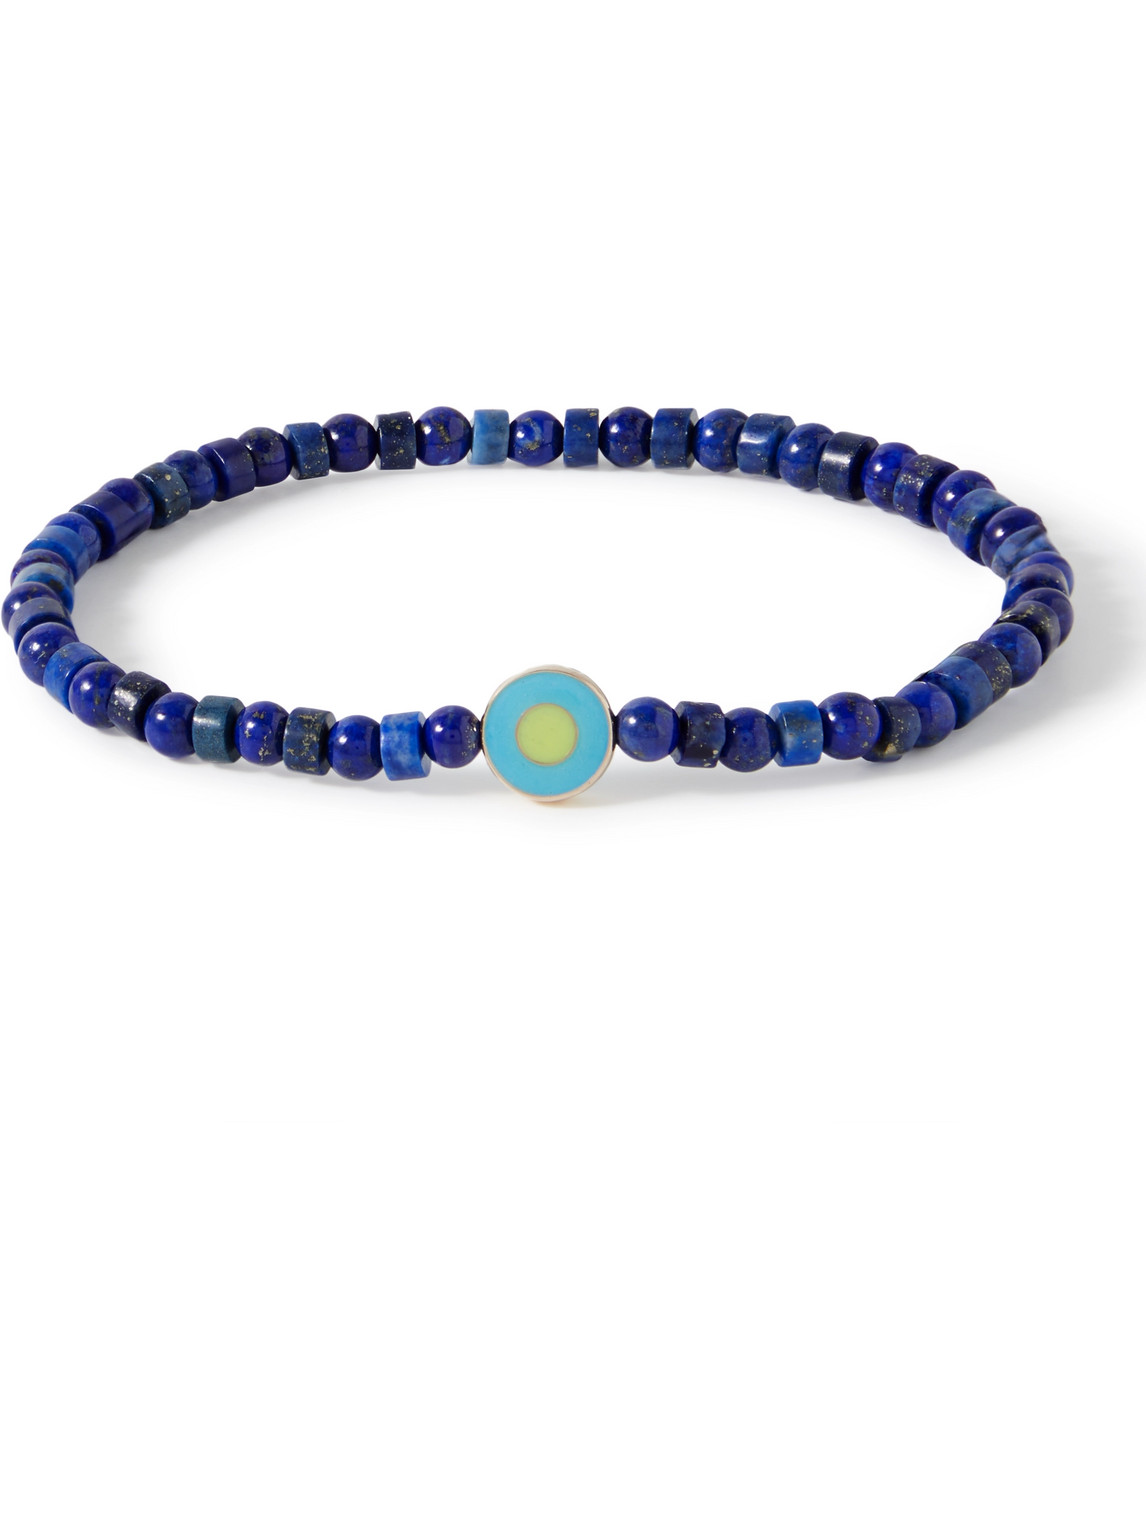 Luis Morais Gold, Enamel And Lapis Lazuli Beaded Bracelet In Blue